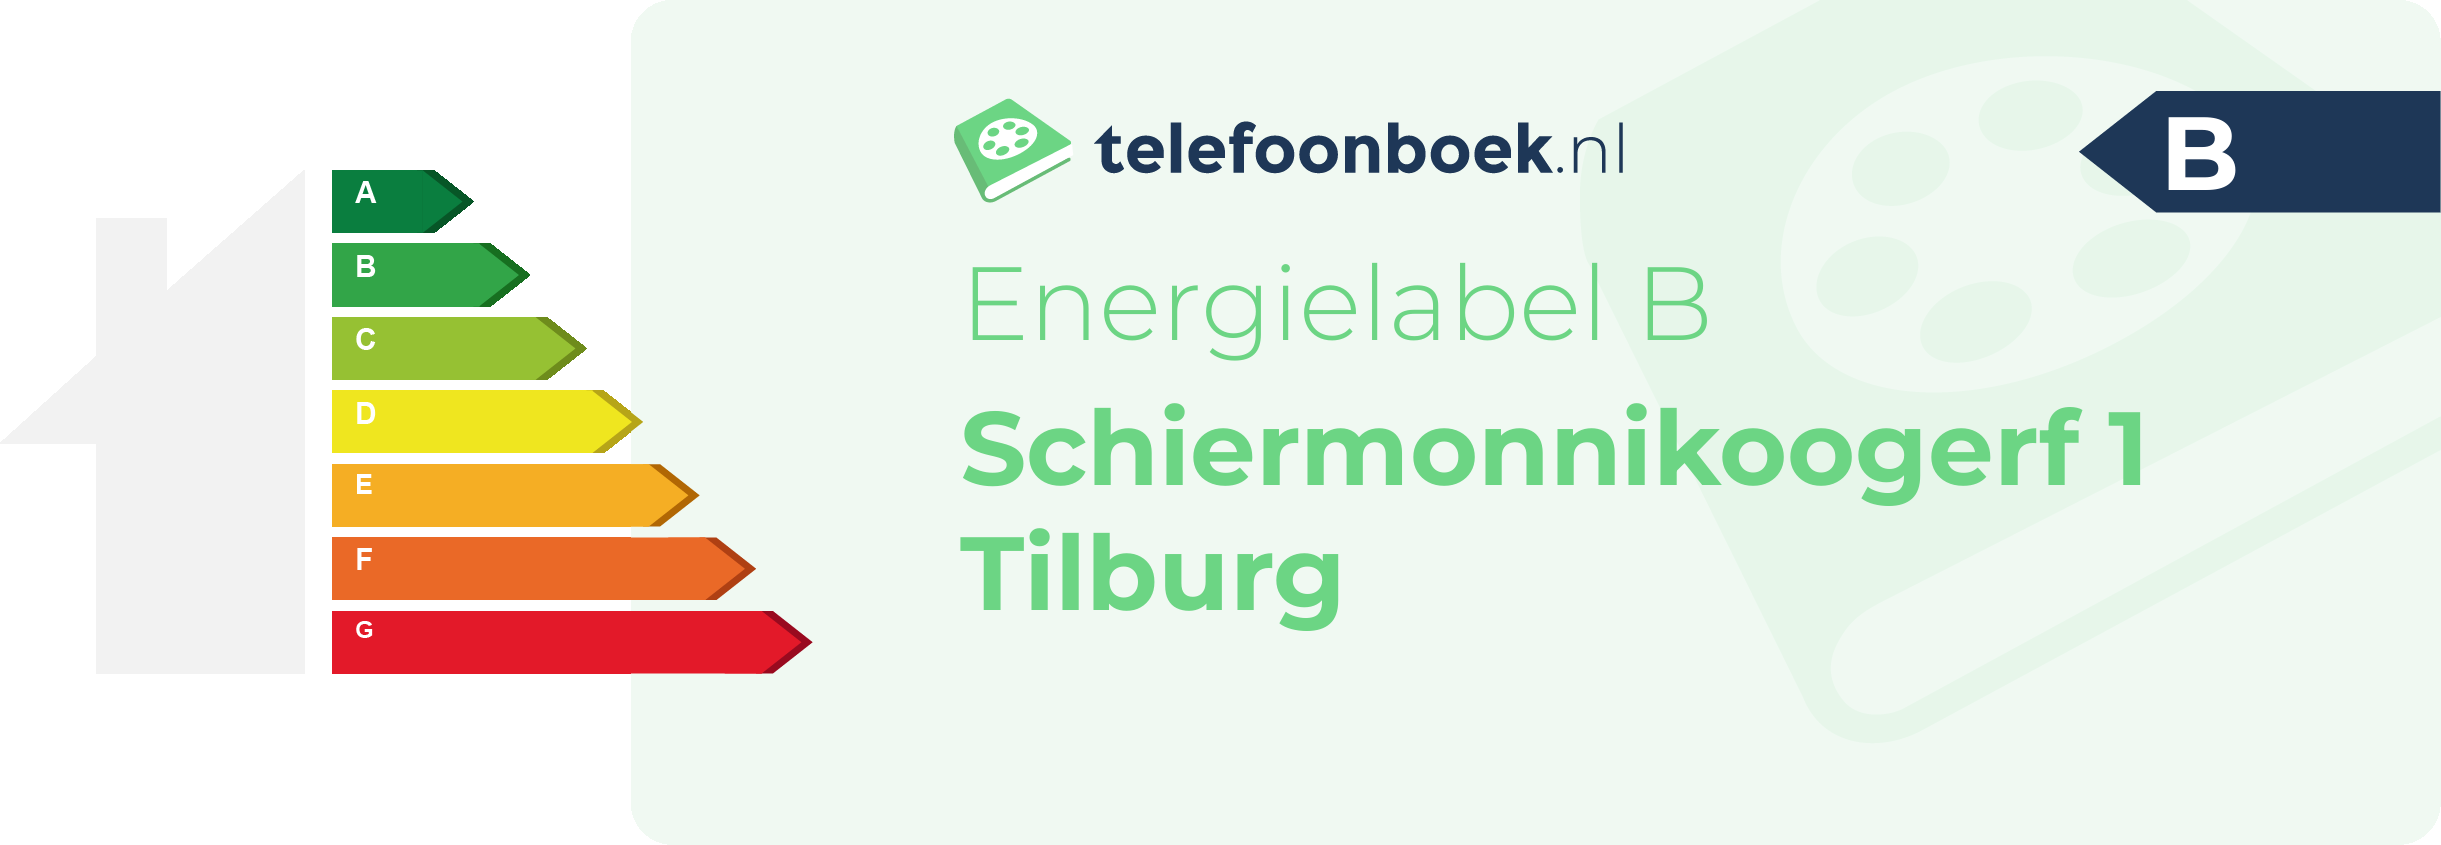 Energielabel Schiermonnikoogerf 1 Tilburg